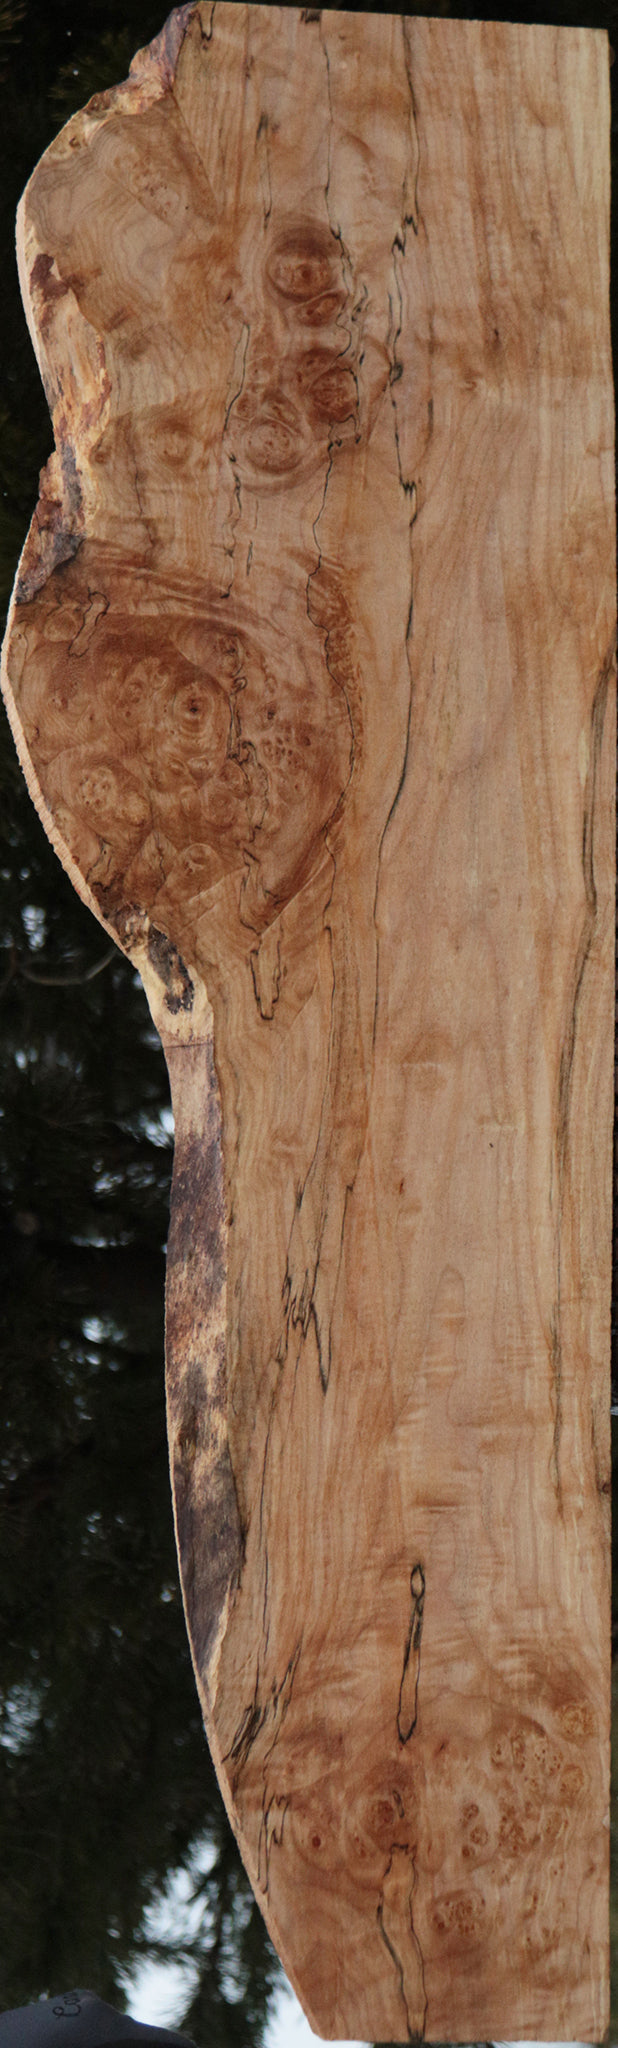 Maple Burl Lumber